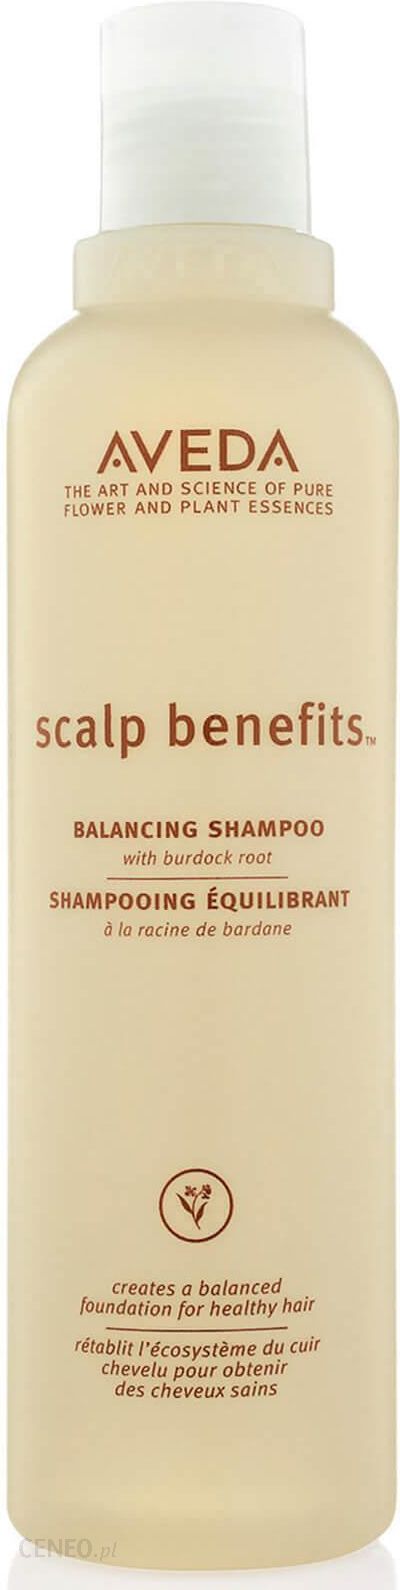 aveda scalp benefits szampon ceneo